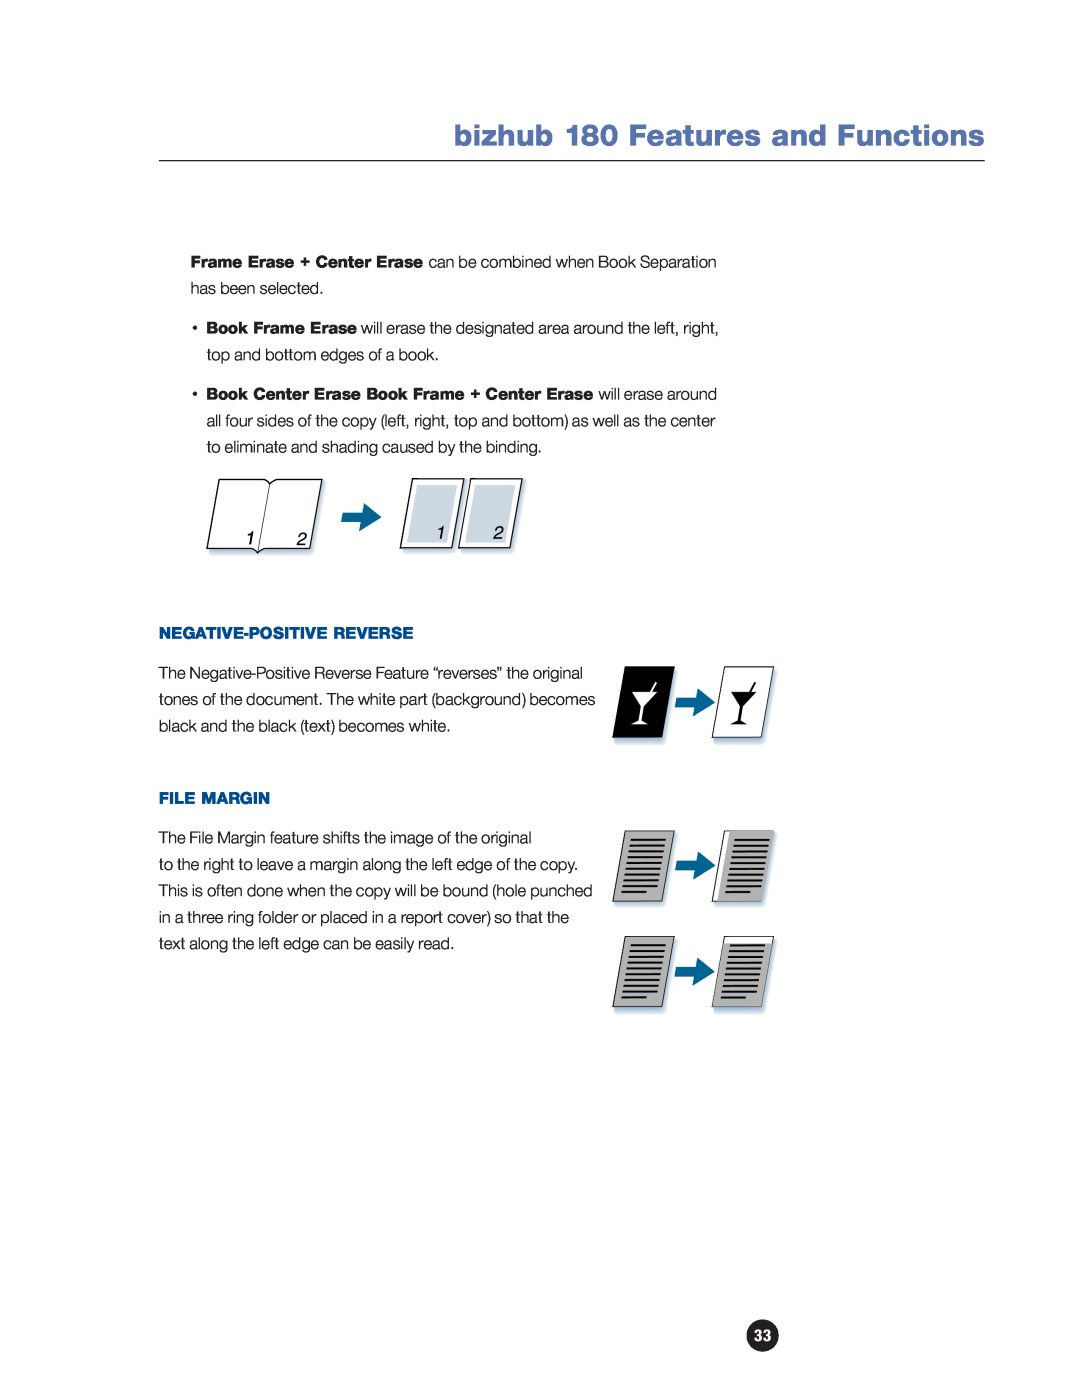 Konica Minolta manual Negative-Positive Reverse, File Margin, bizhub 180 Features and Functions 